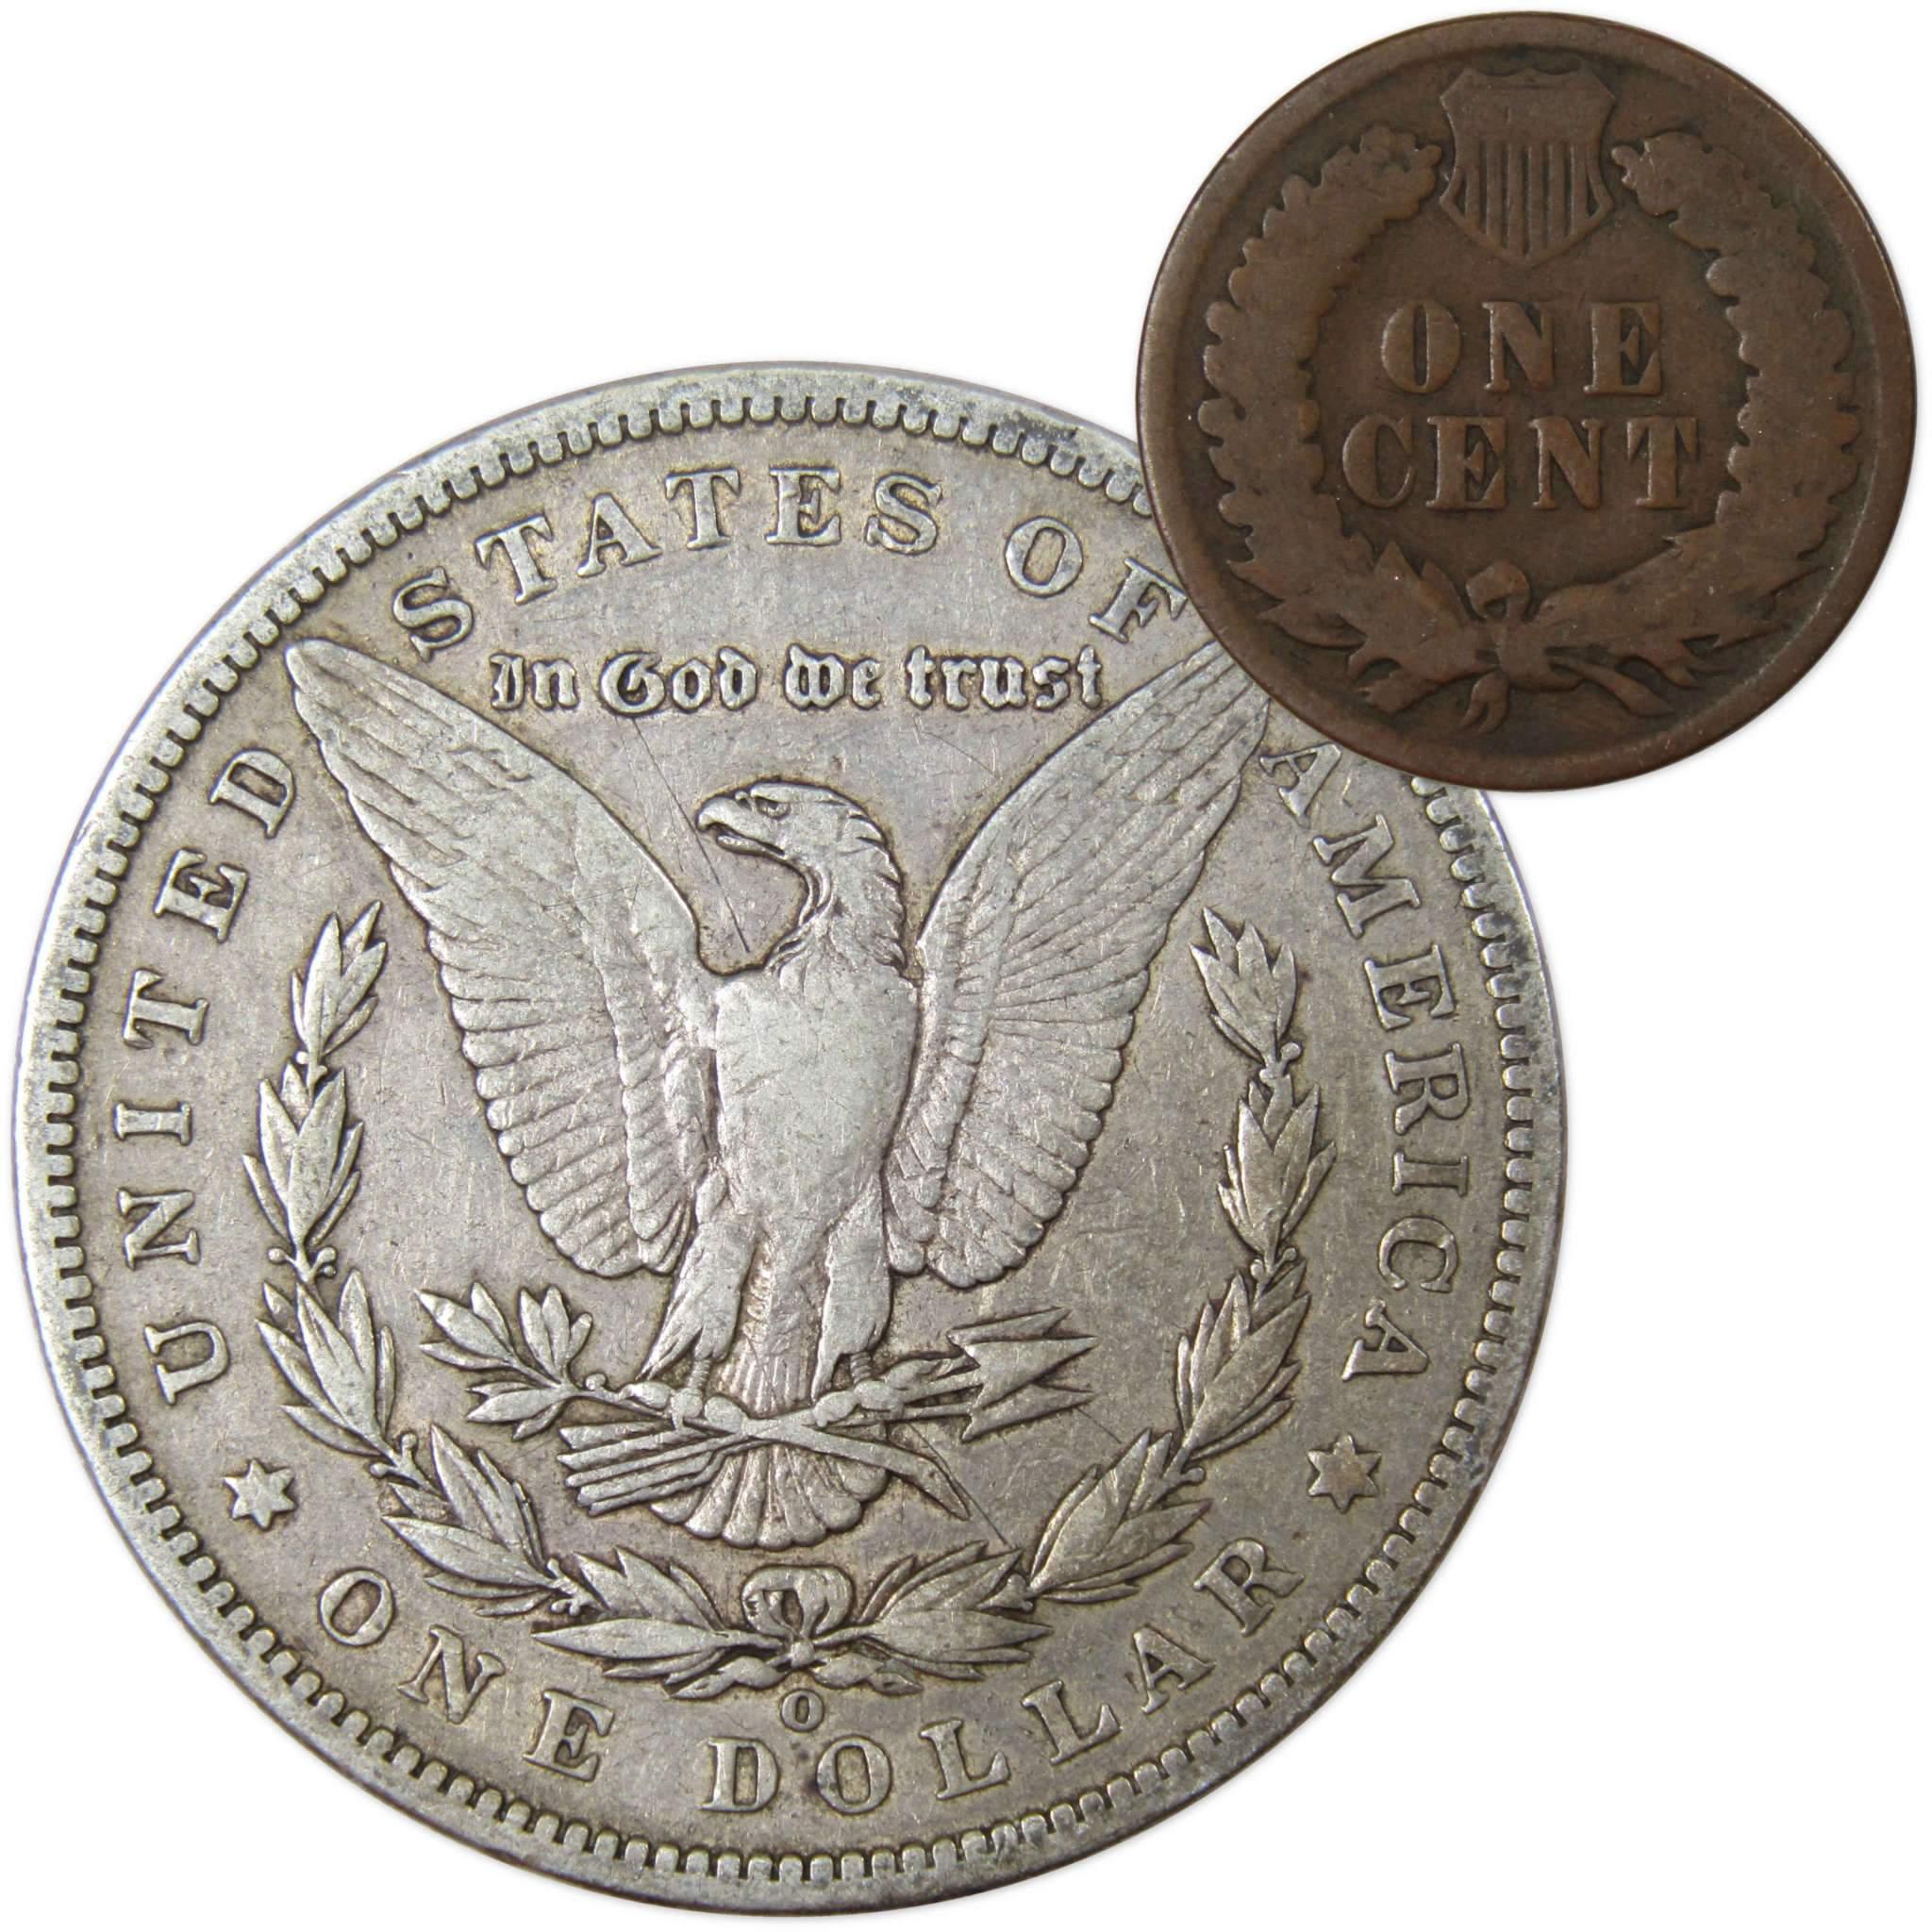 1901 O Morgan Dollar F Fine 90% Silver Coin with 1899 Indian Head Cent G Good - Morgan coin - Morgan silver dollar - Morgan silver dollar for sale - Profile Coins &amp; Collectibles